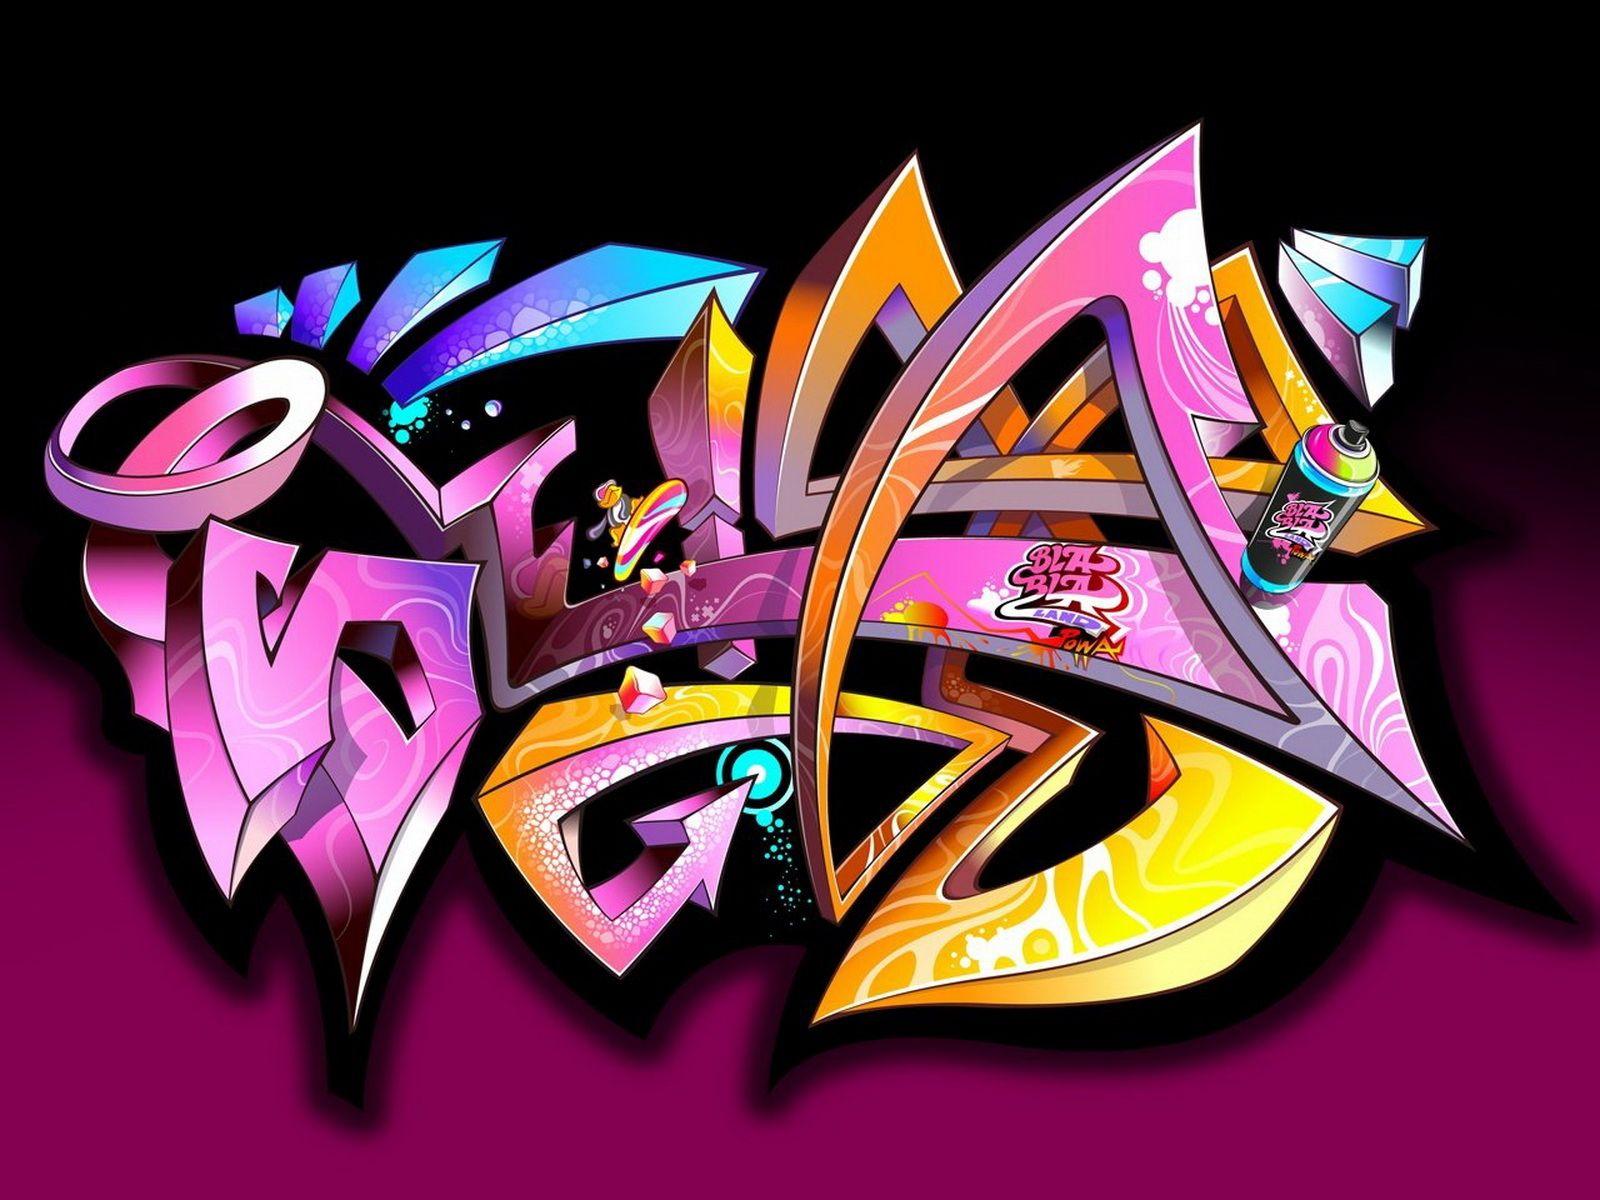 Cool 3D Graffiti Pics HD Graffiti Wallpaper